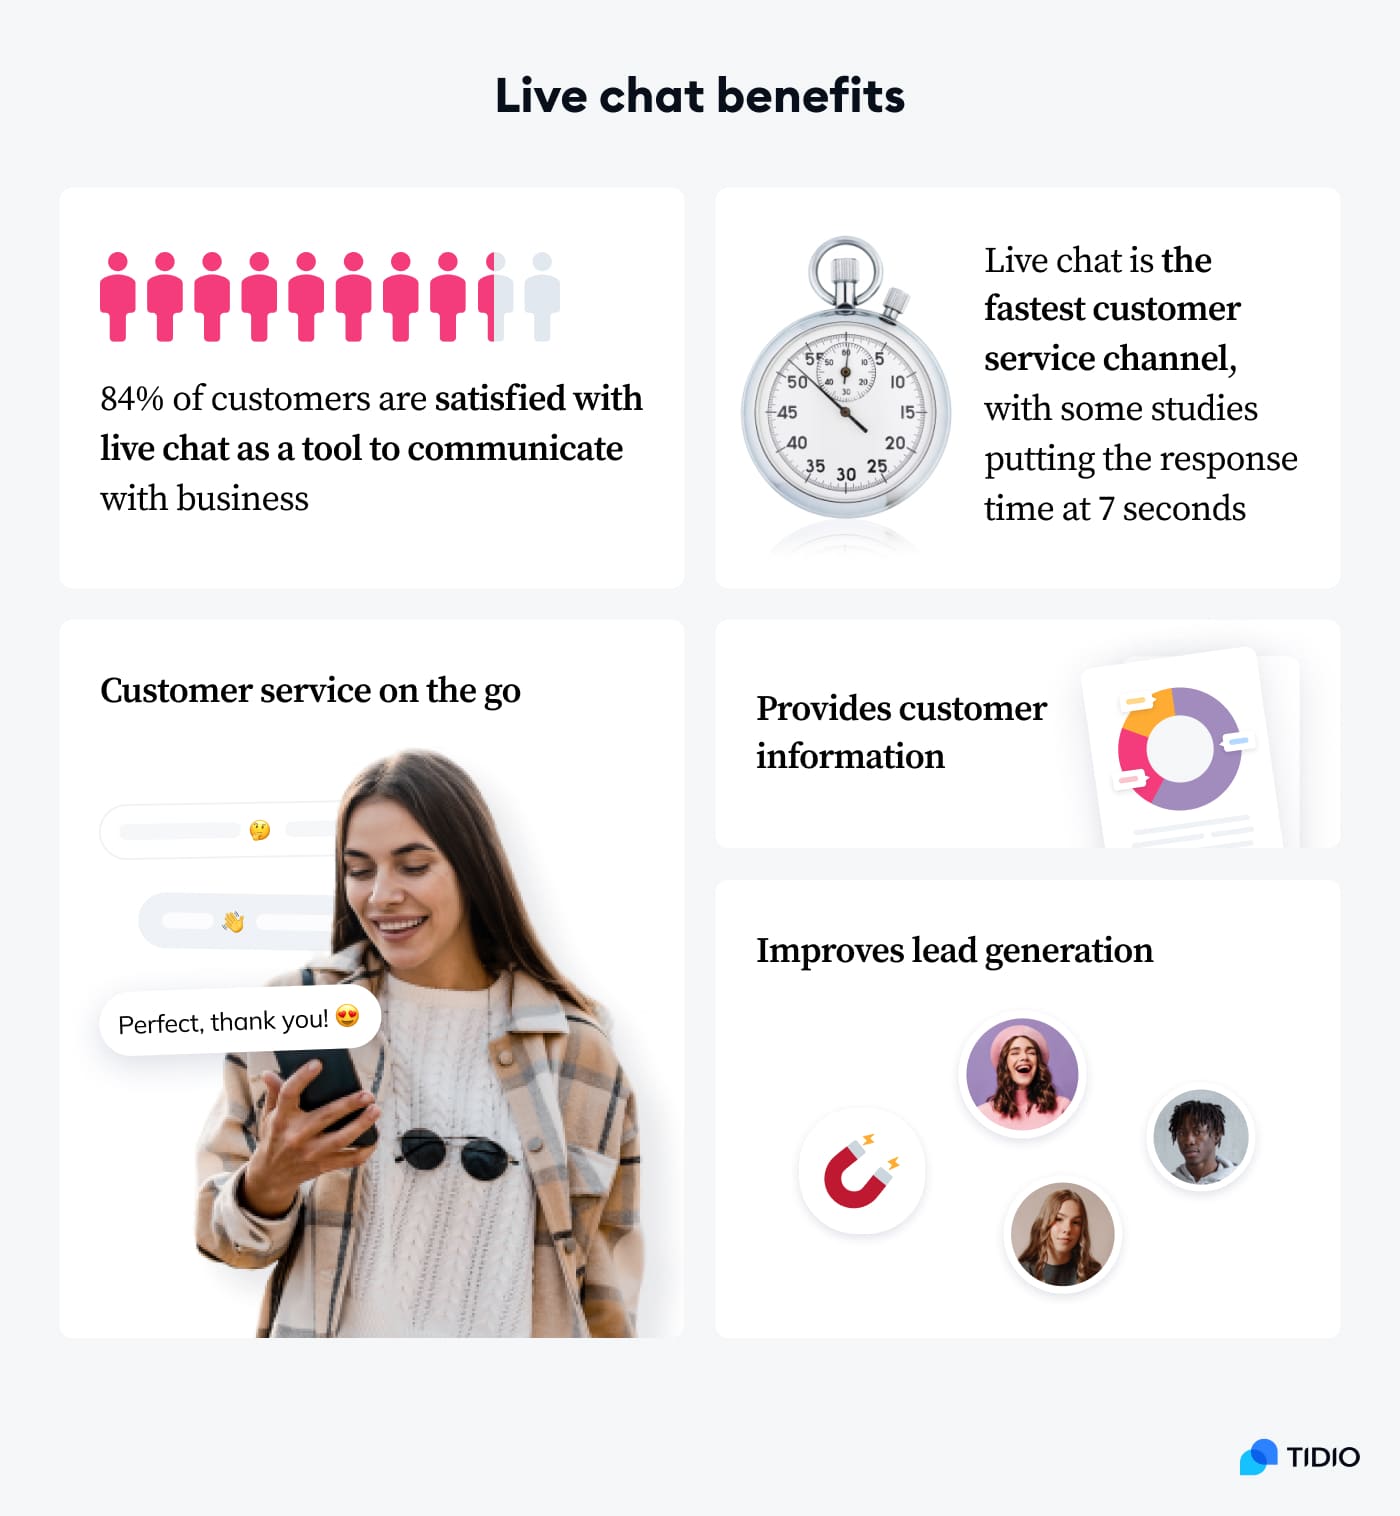 live chat benefits image